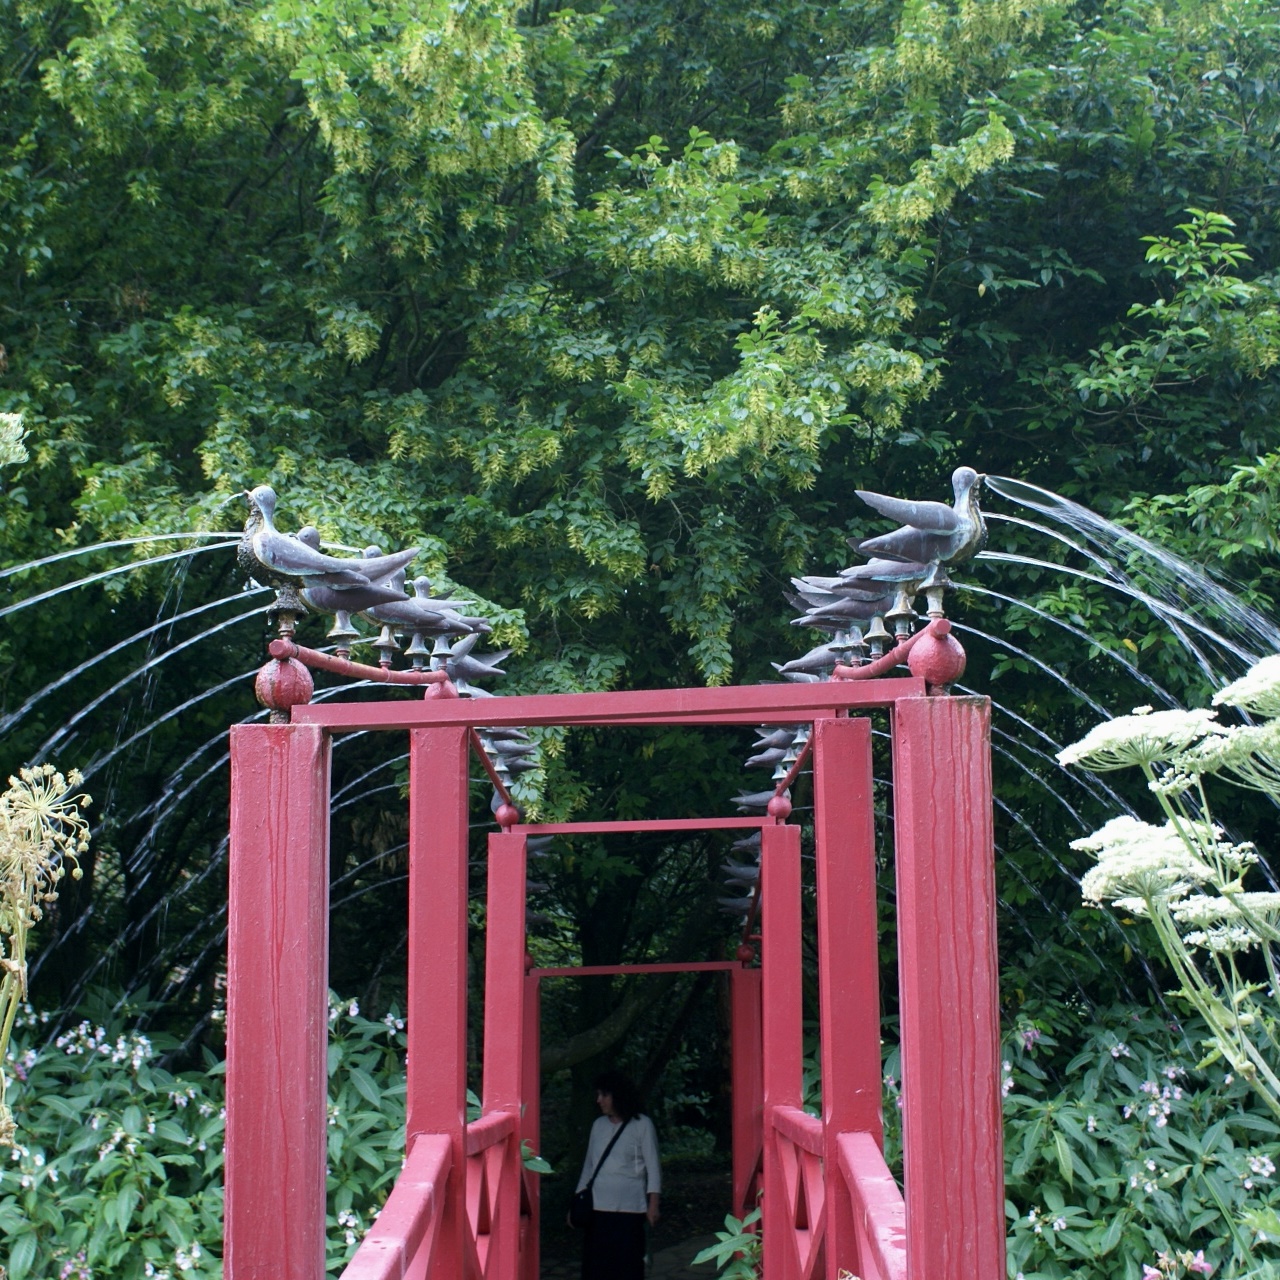 Bridge in the garden at the Chateau de Vendeuvre